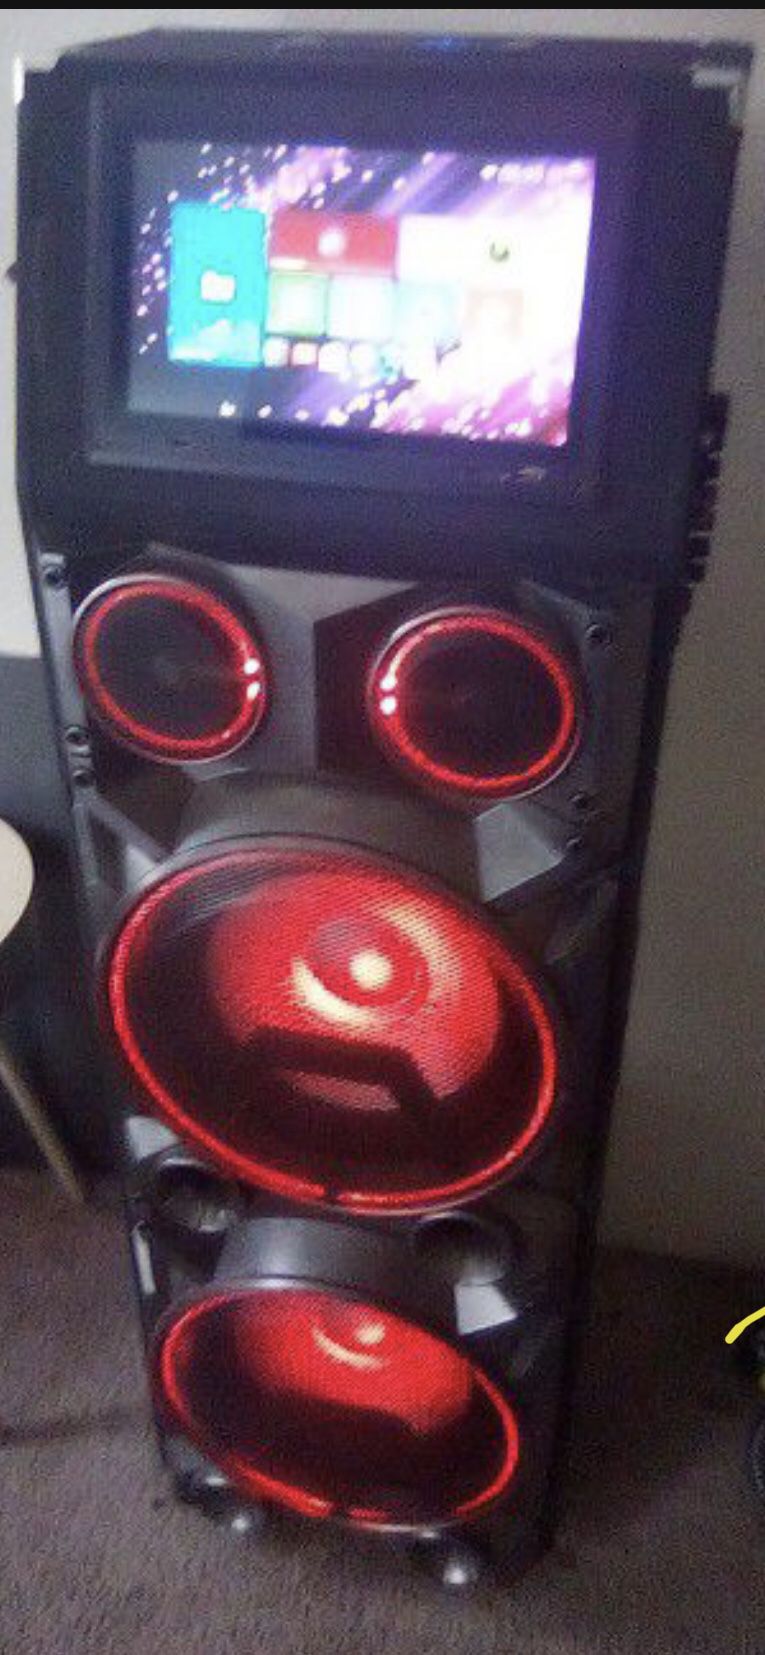 Party Bluetooth Speaker 